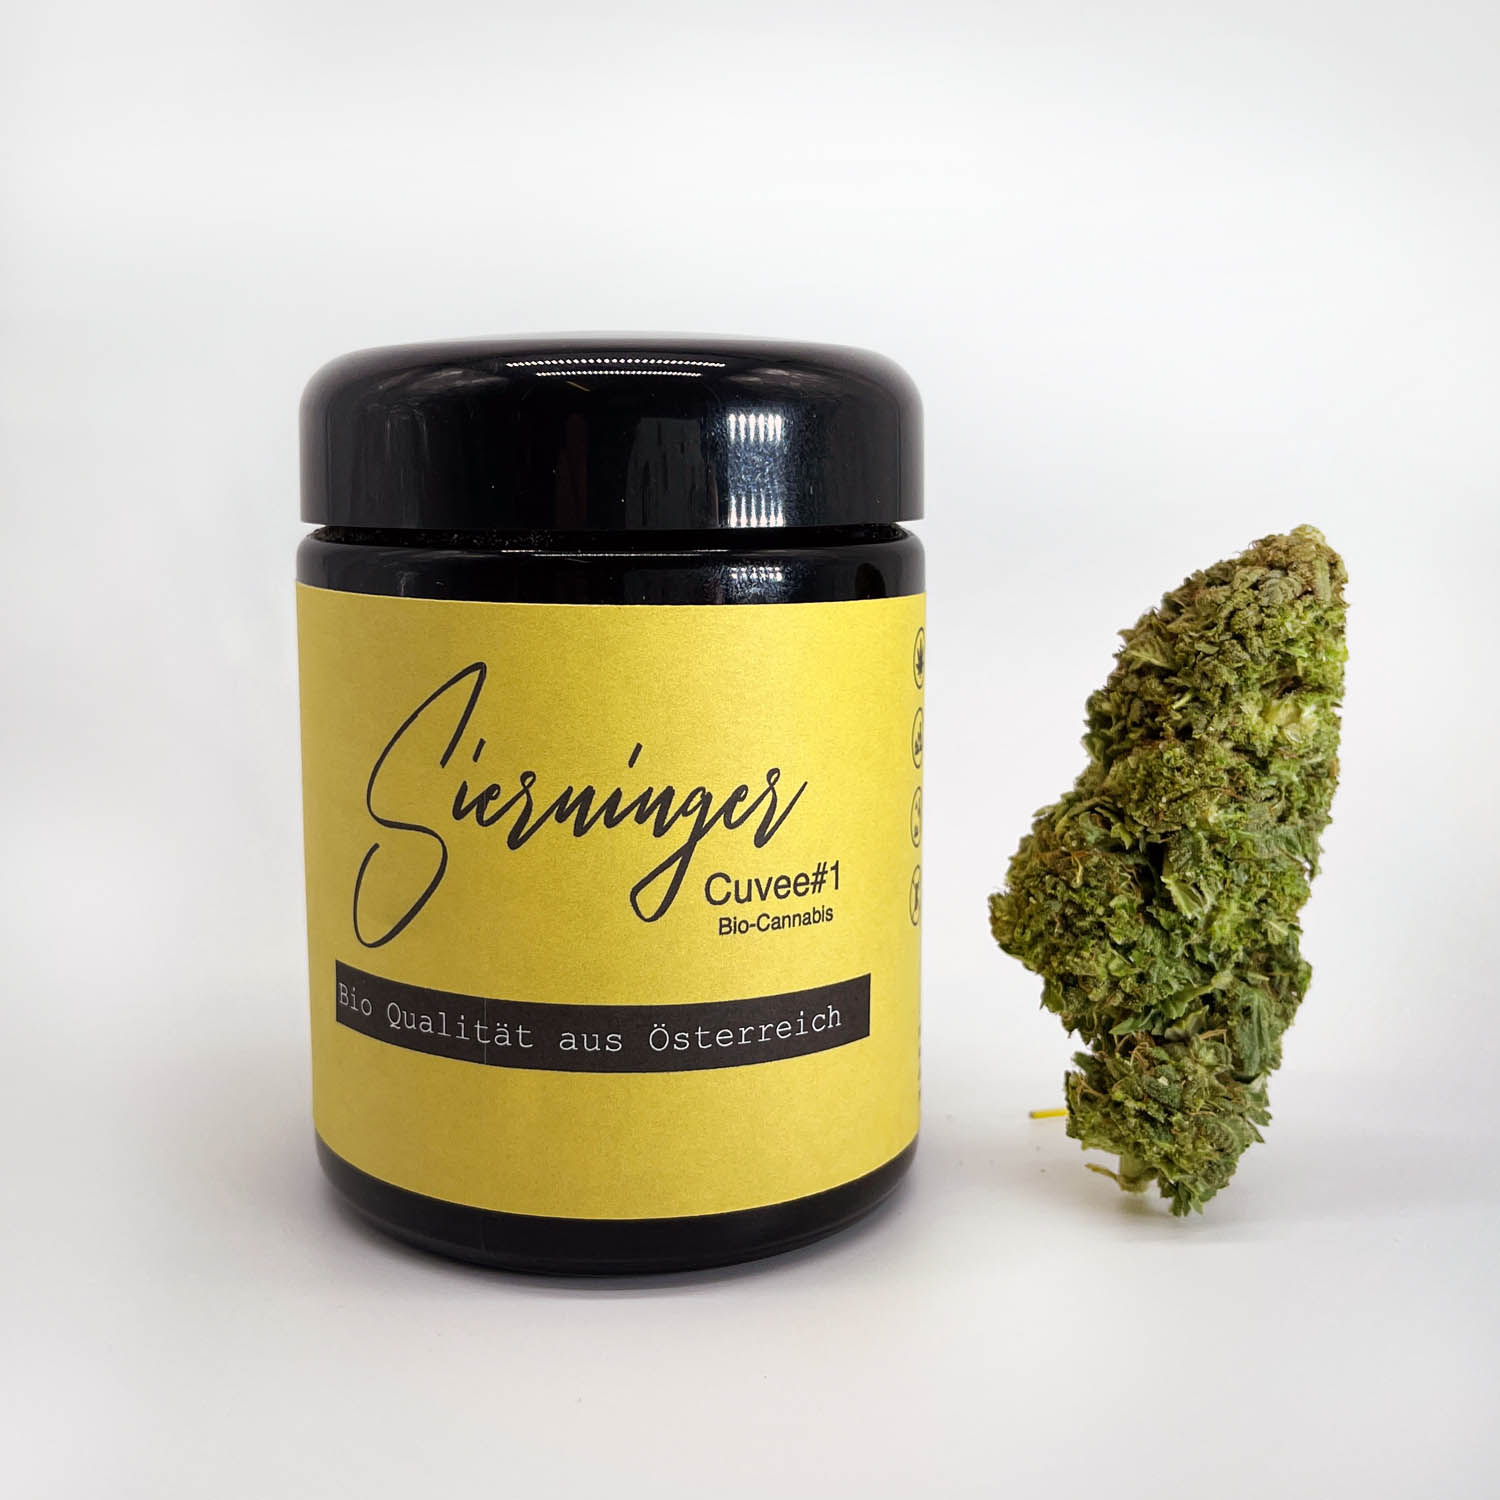 Sierninger Cuvee #1 - CBD Cannabis (10g)